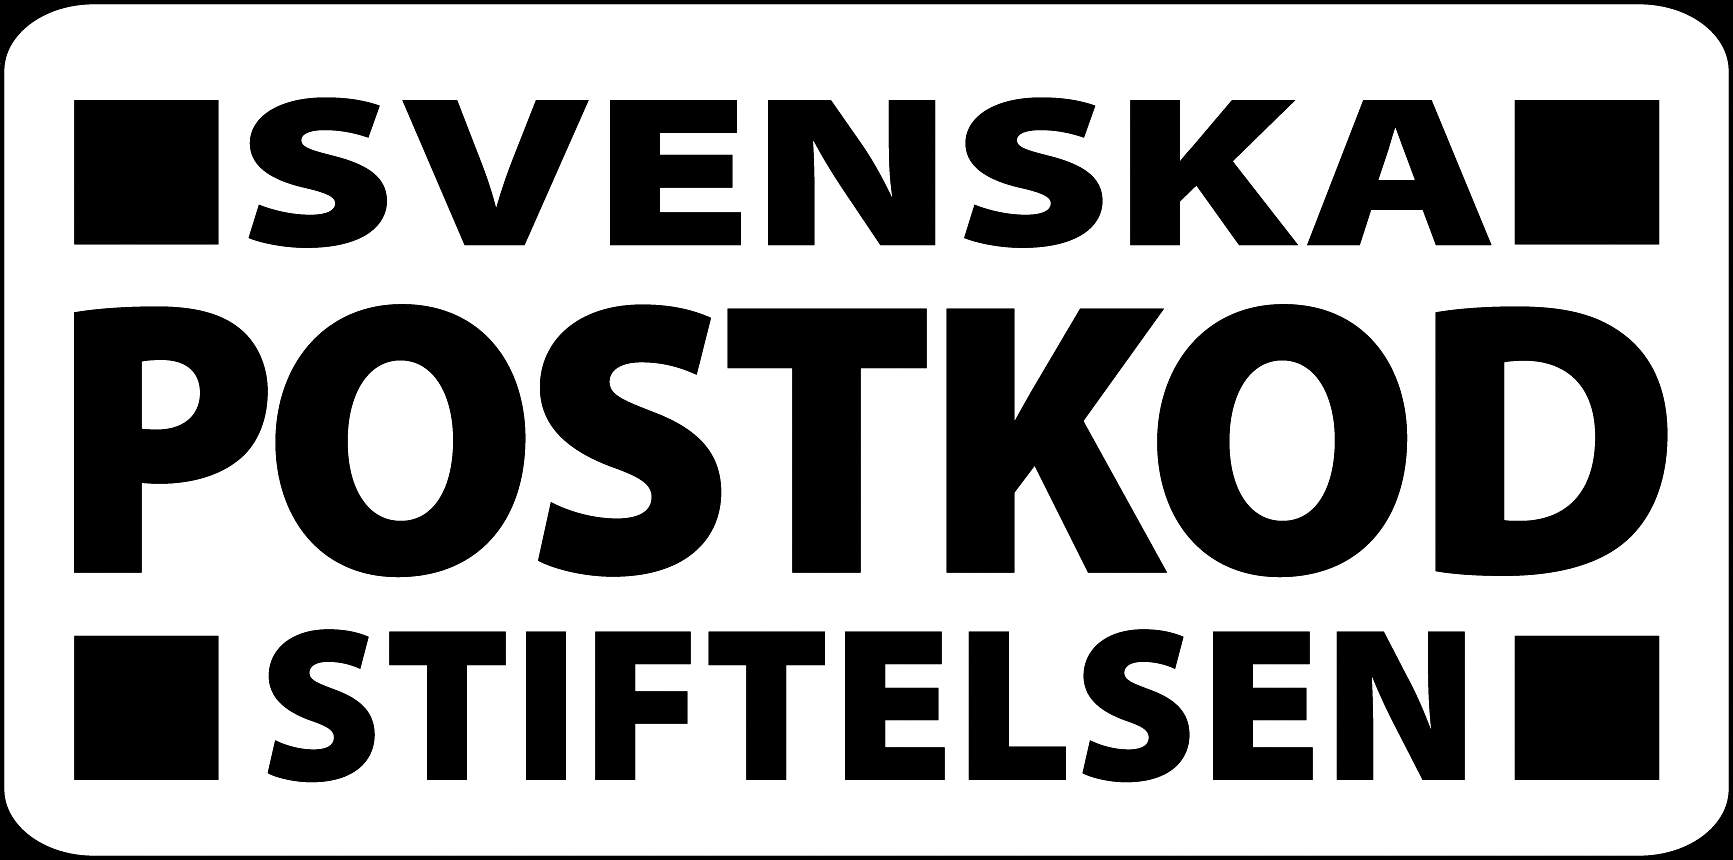 Swedish Postcode Foundation logo